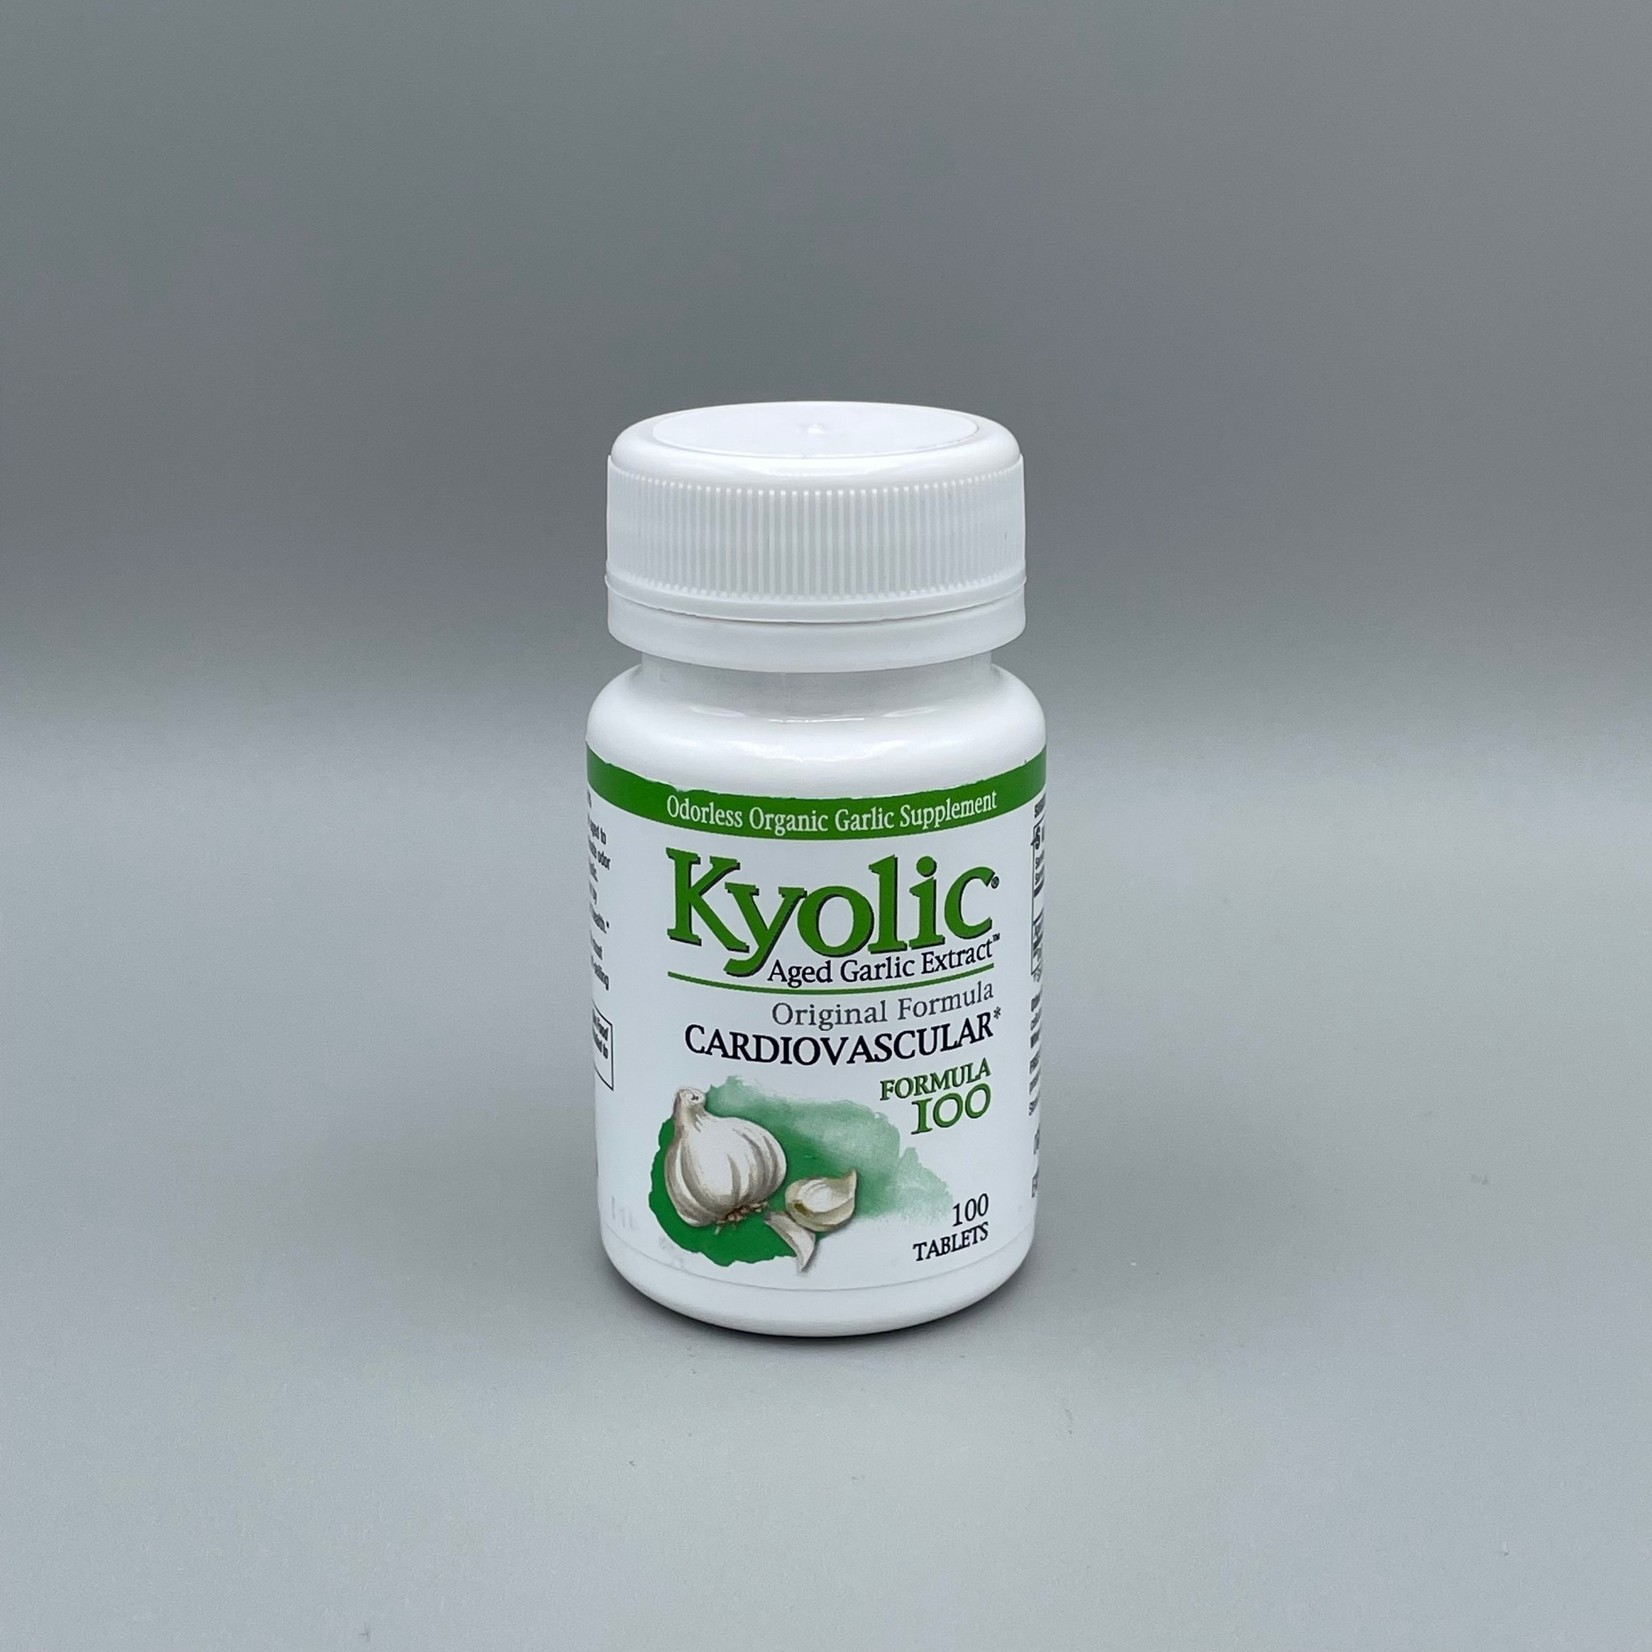 Kyolic Formula 100: Cardiovascular (Original), 100 Tablets